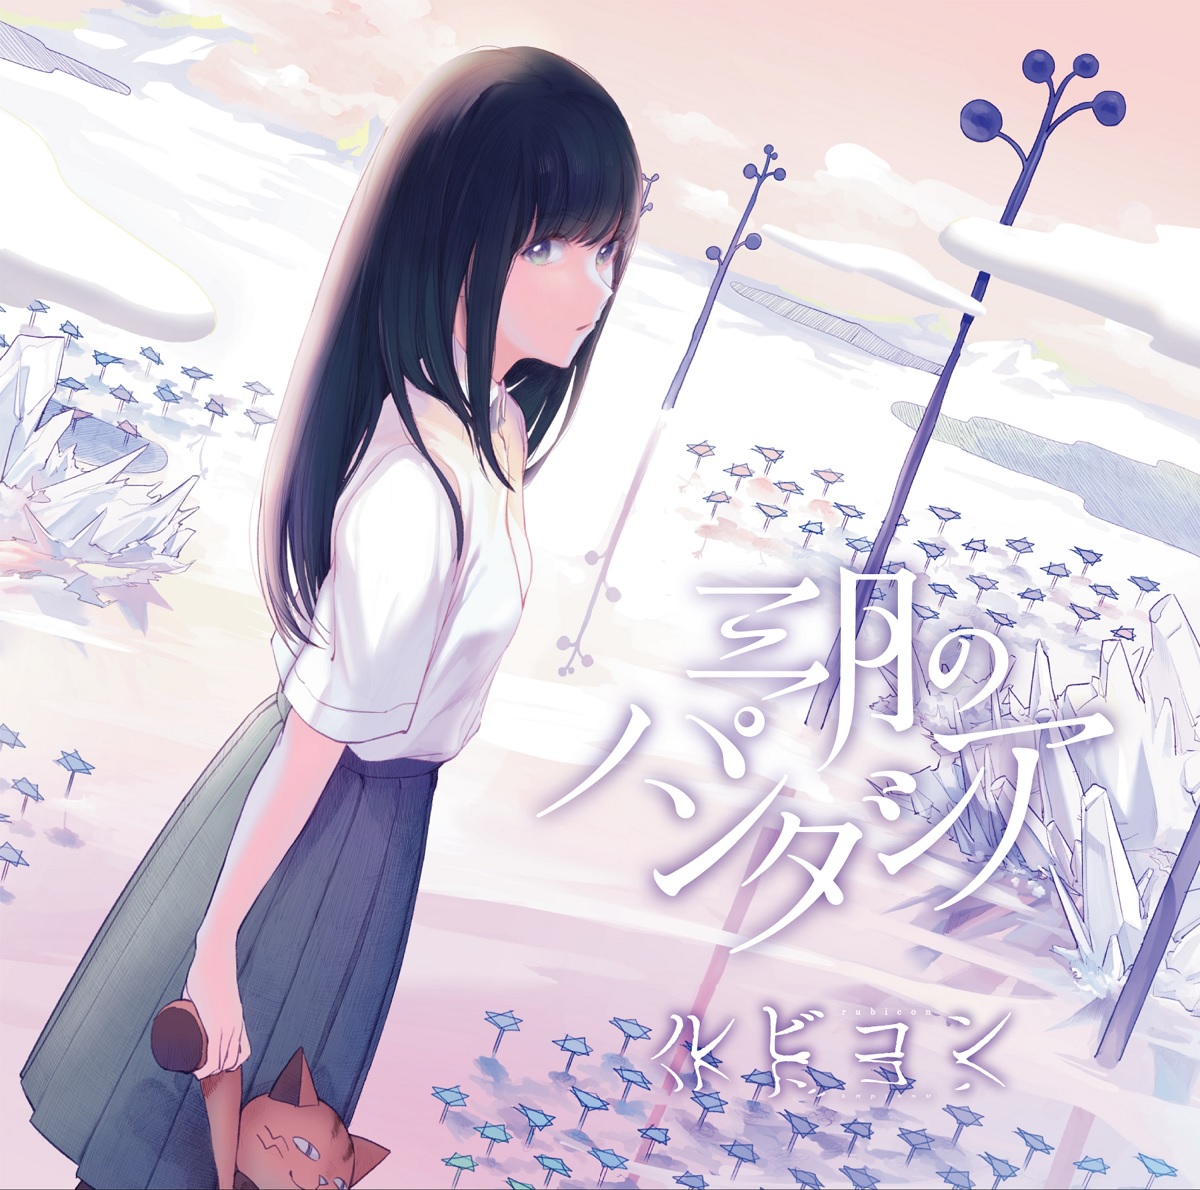 Cover art for『Sangatsu no Phantasia - Rubicon』from the release『Rubicon』